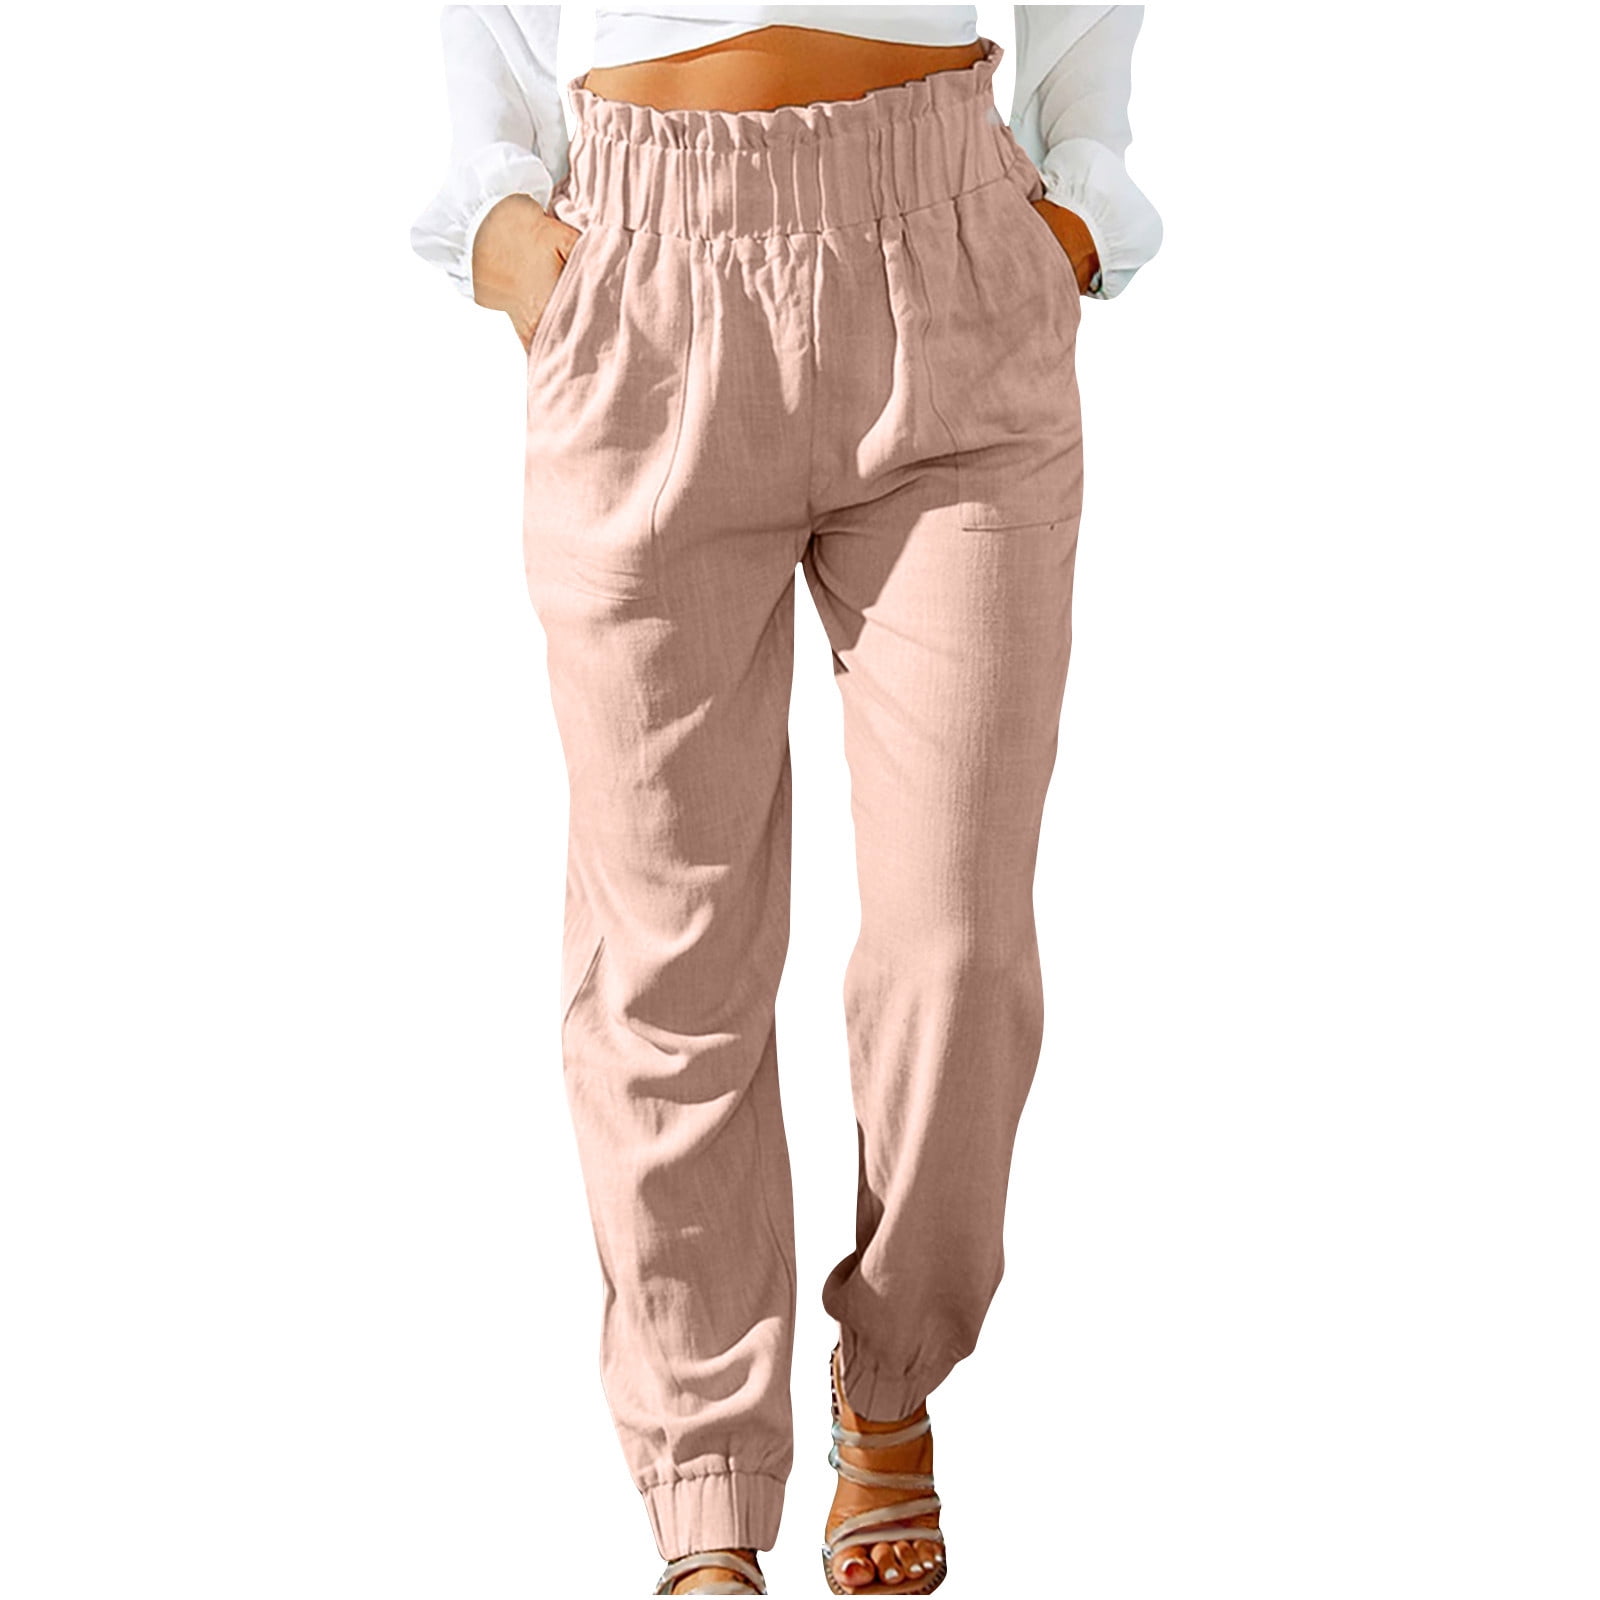 Mrat Full Length Pants Women's Casual Overalls Fashion Ladies Summer ...